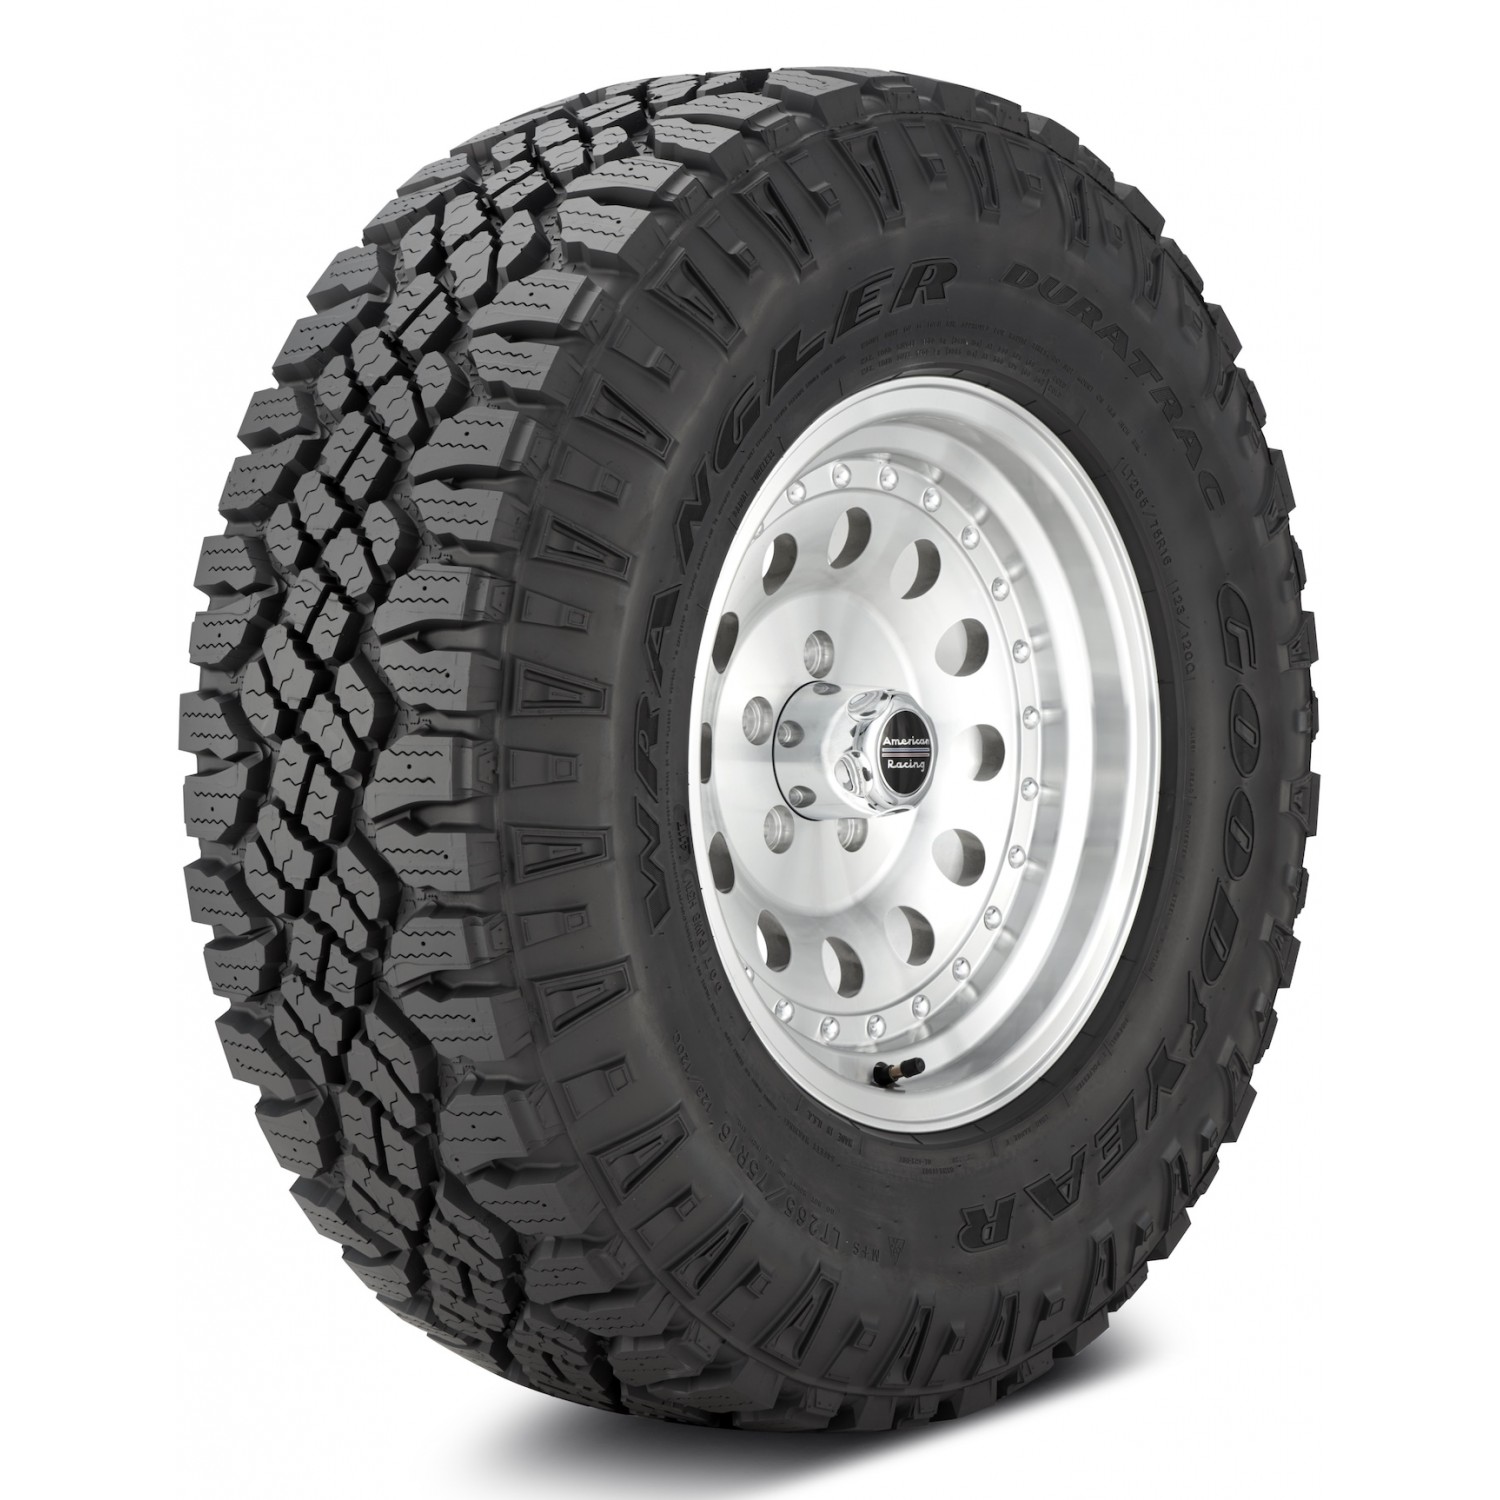 Goodyear Wrangler DuraTrac (P) Black Sidewall Tire (255/70R18 113S)  vzn121243